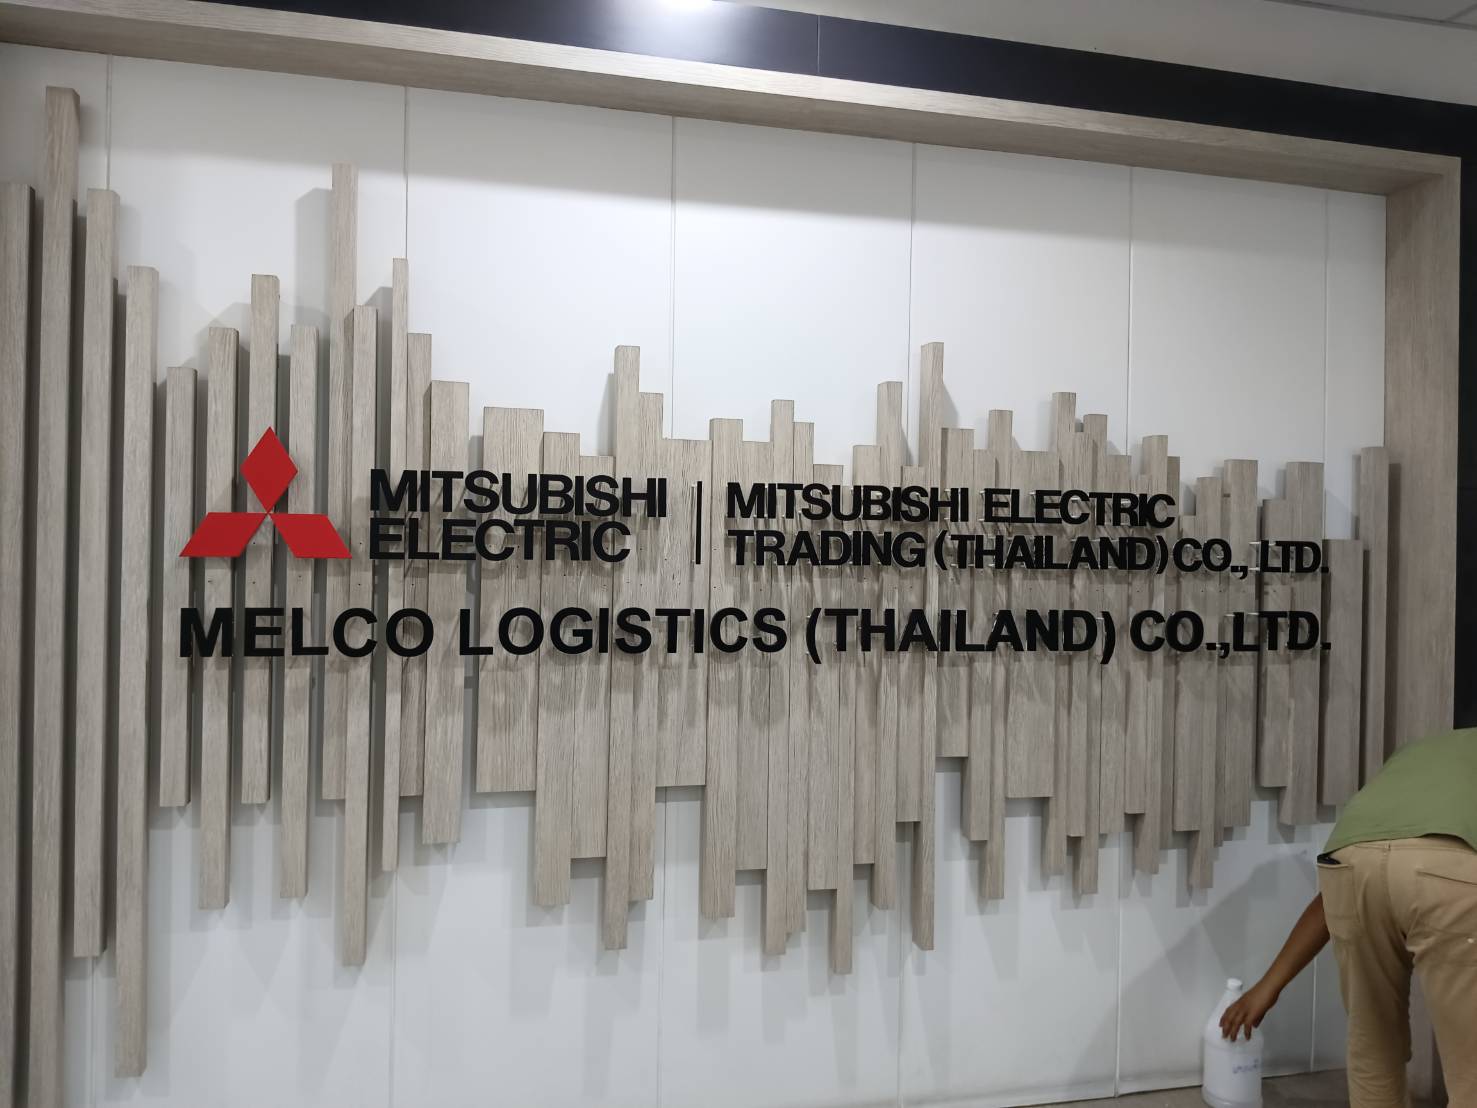 Mitsubishi electric trading ( thailand ) co,.ltd.